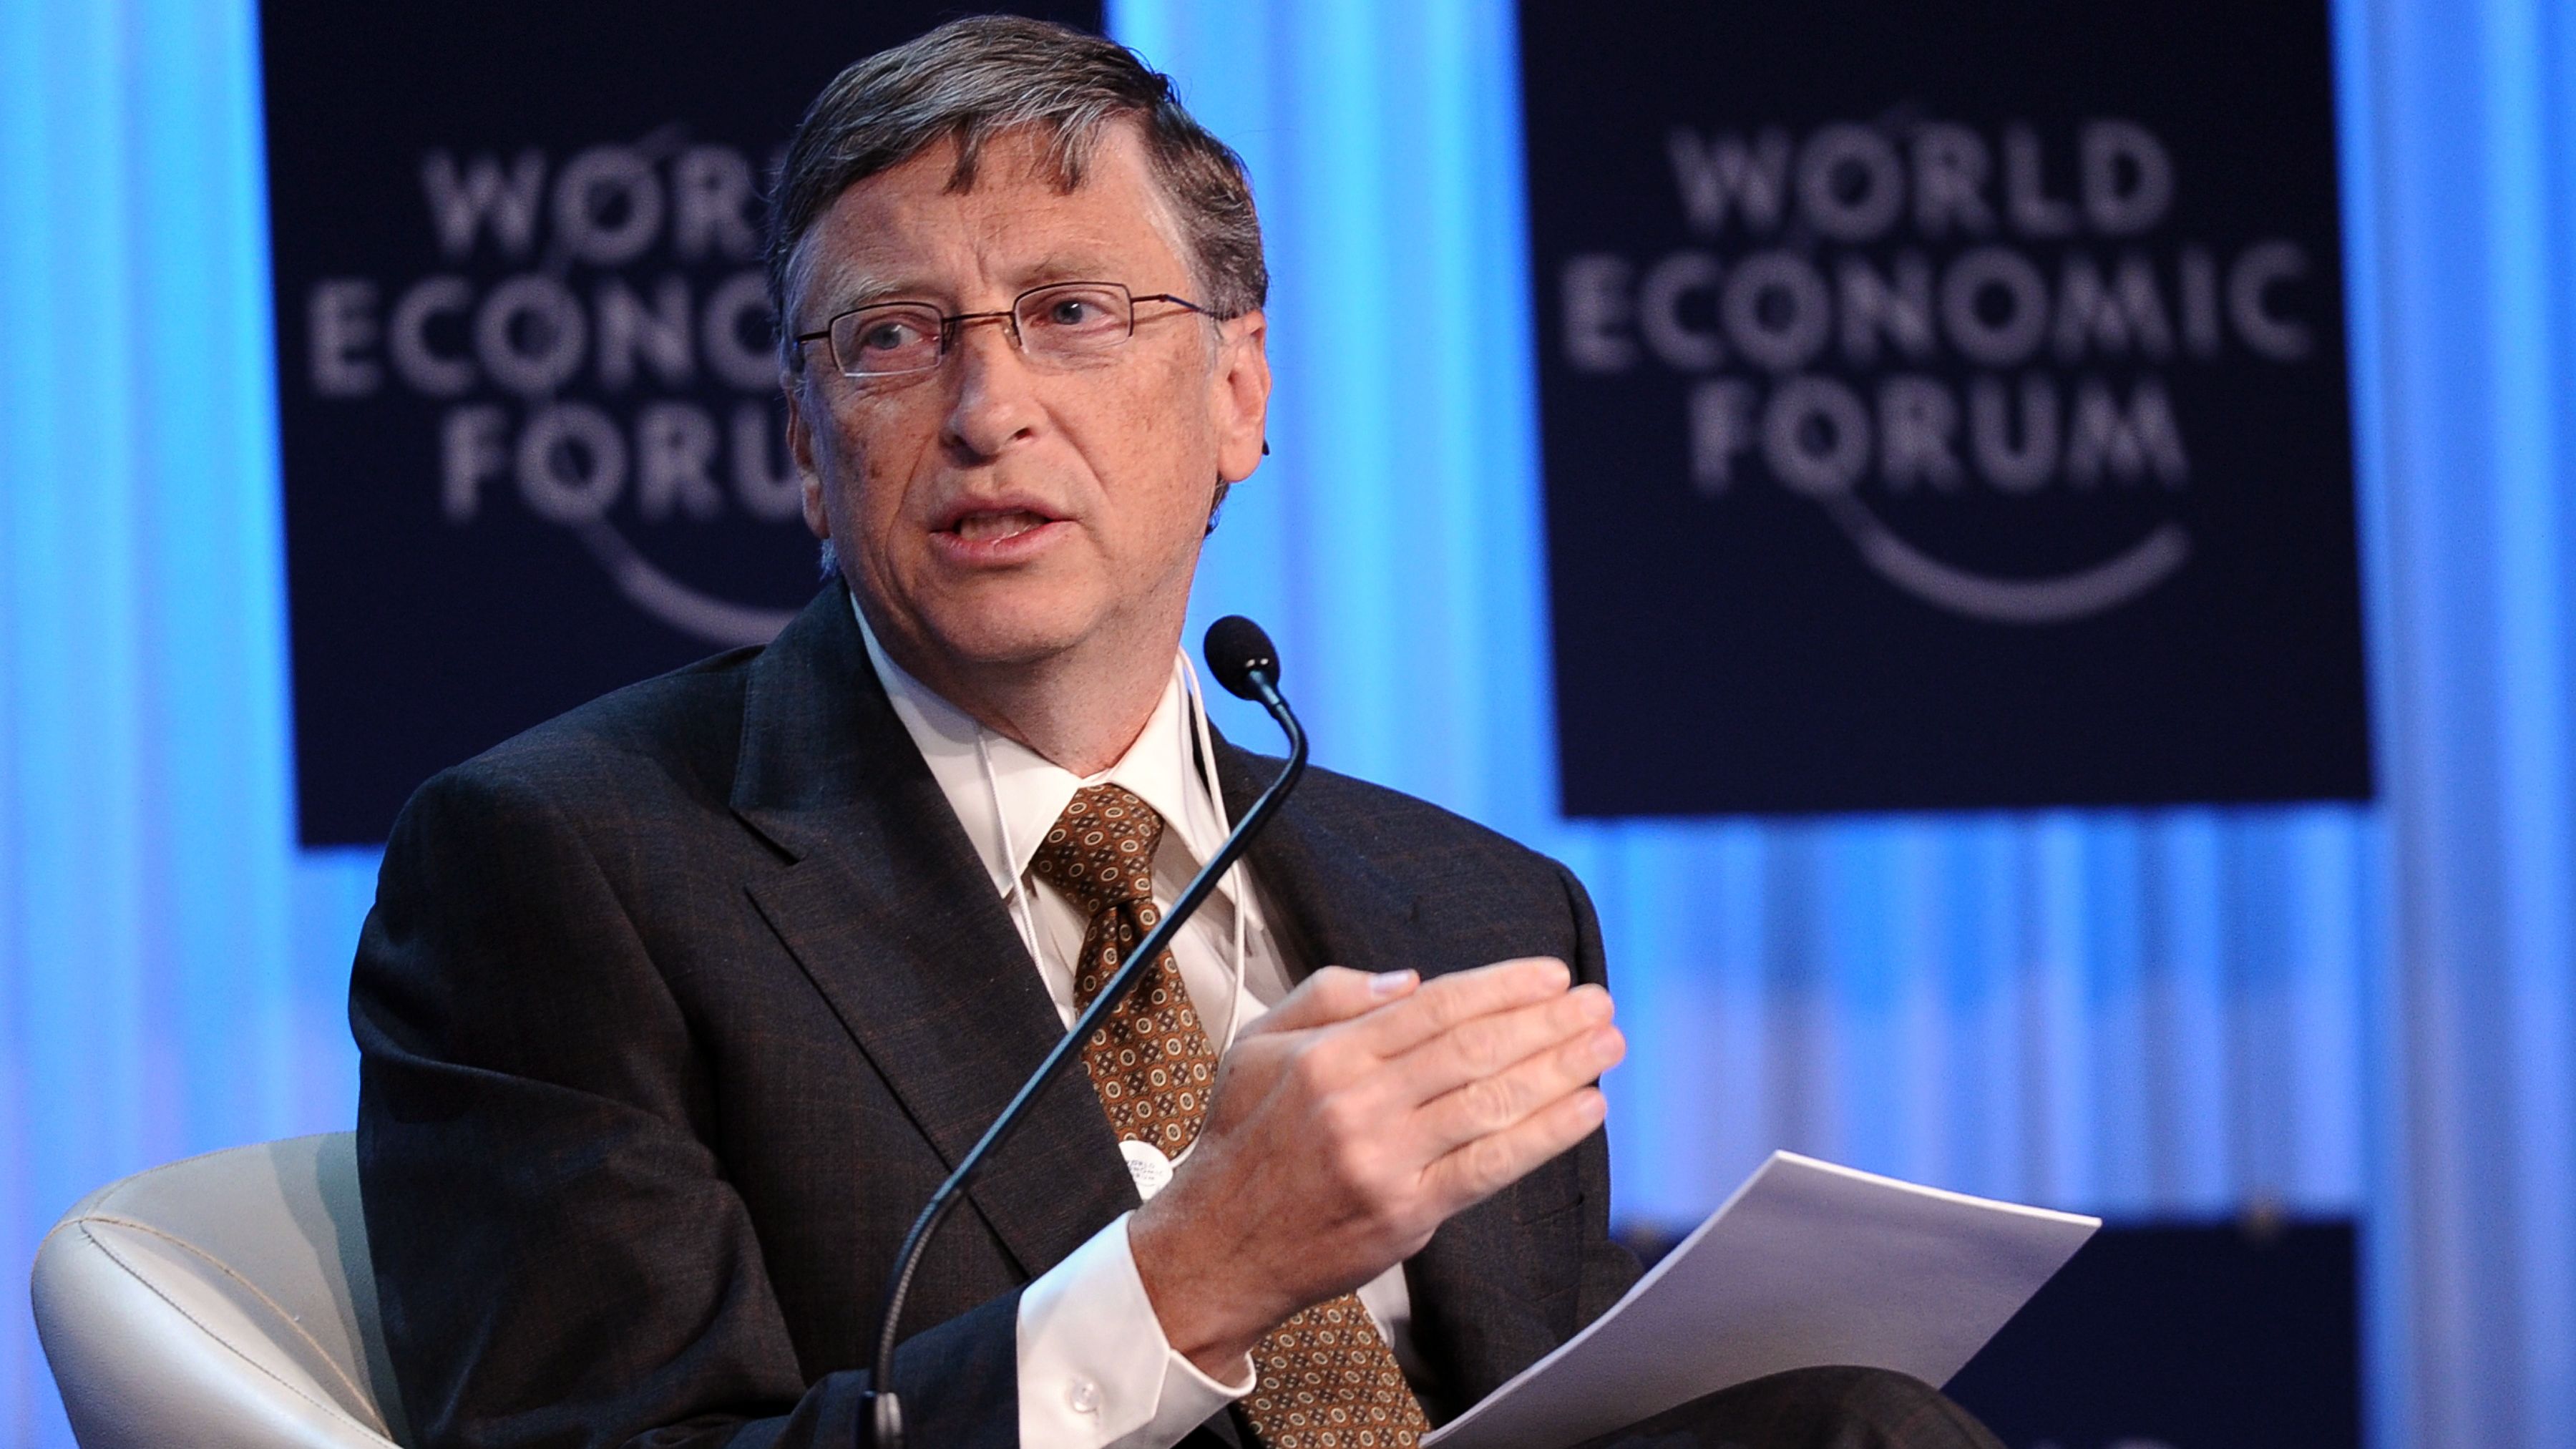 Microsoft founder Bill Gates speaks Thursday at the World Economic Forum in the Swiss resort of Davos.